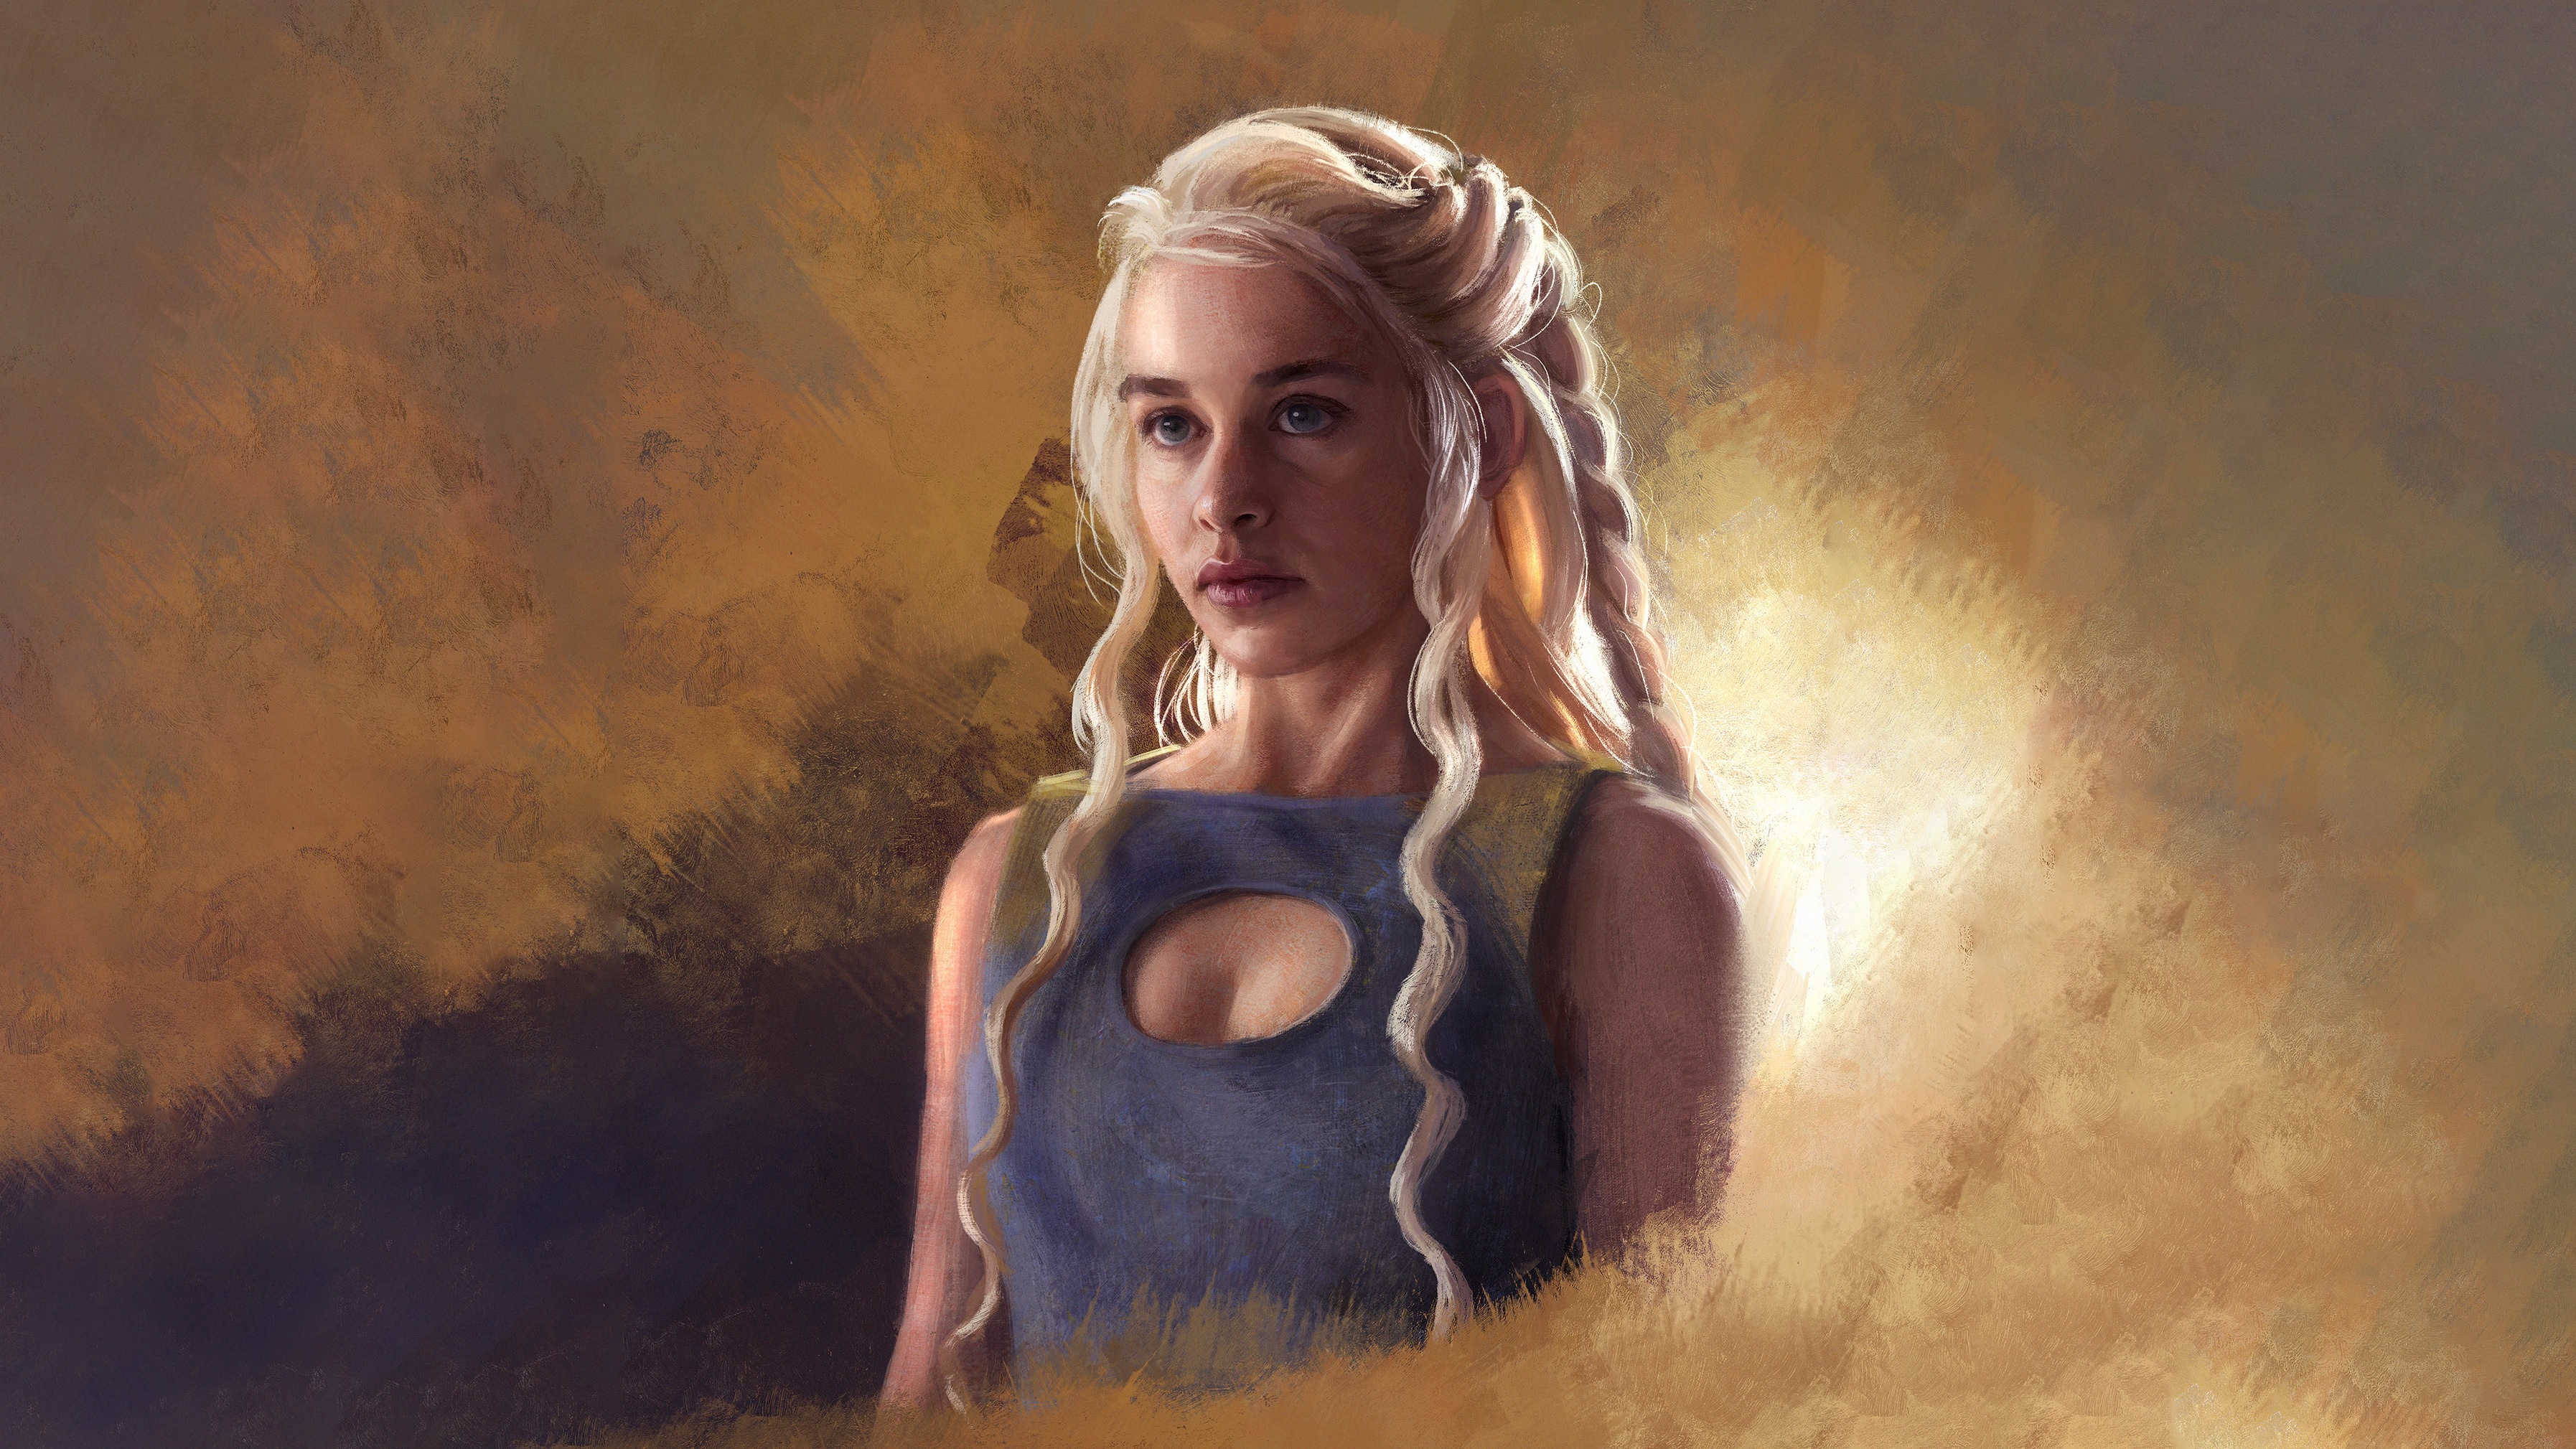 Daenerys Targaryen from Game of Thrones - wide 4